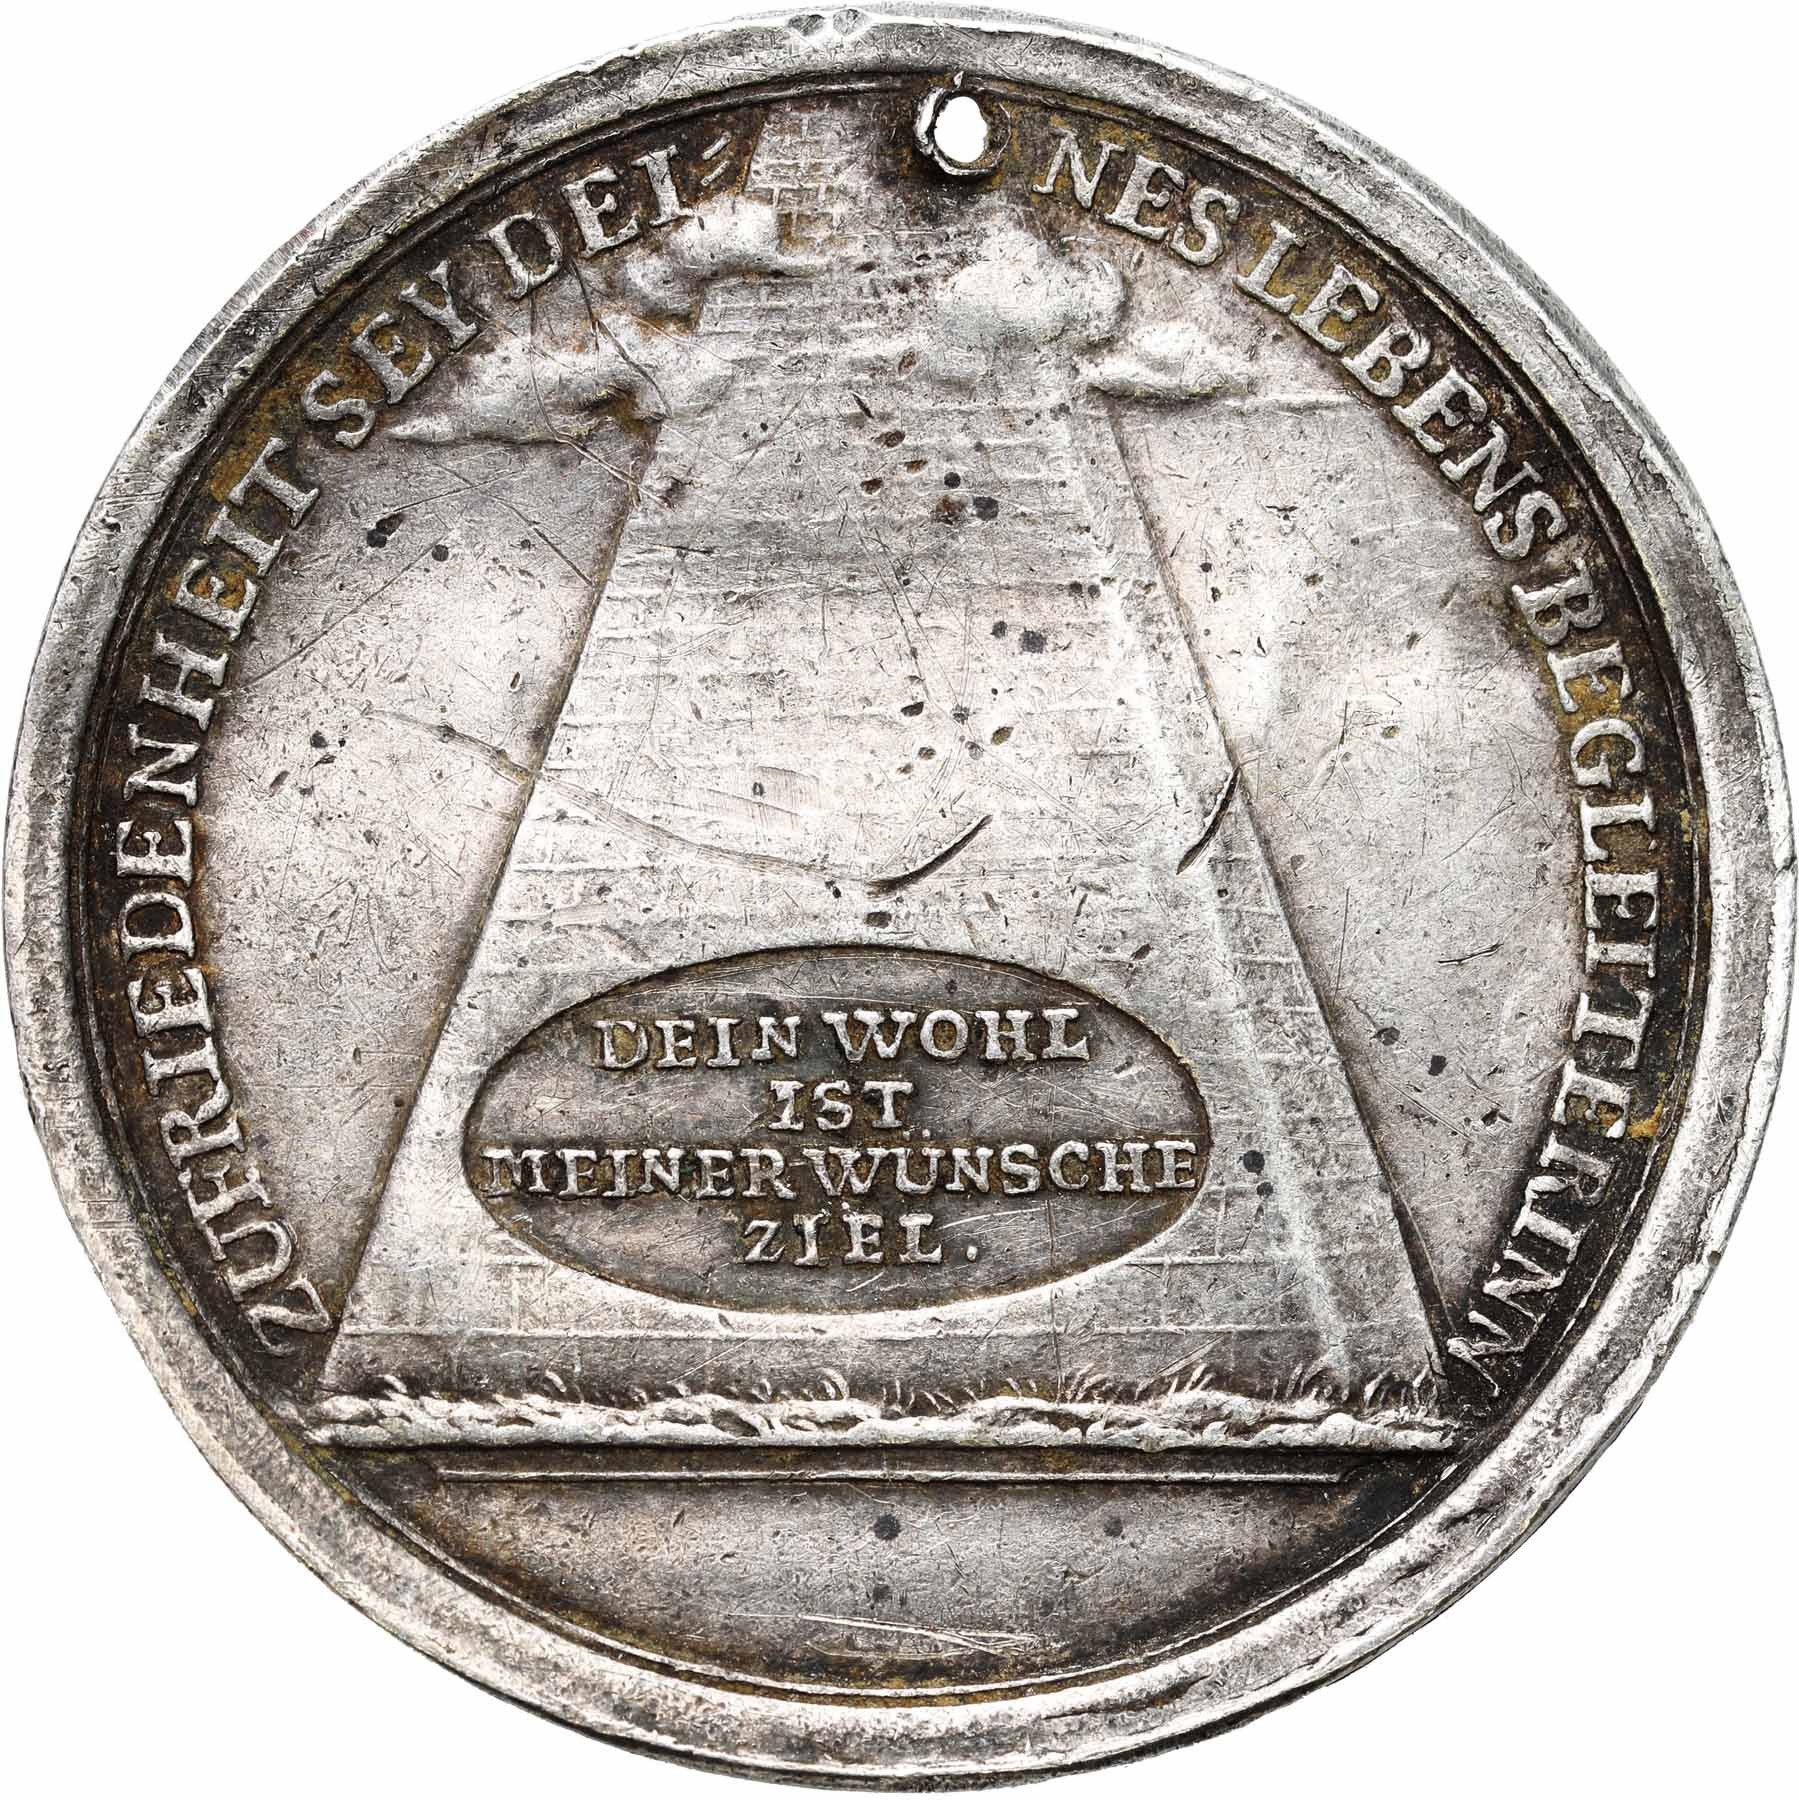 Niemcy, Saksonia. Medal C. J. Krüger Jr., srebro